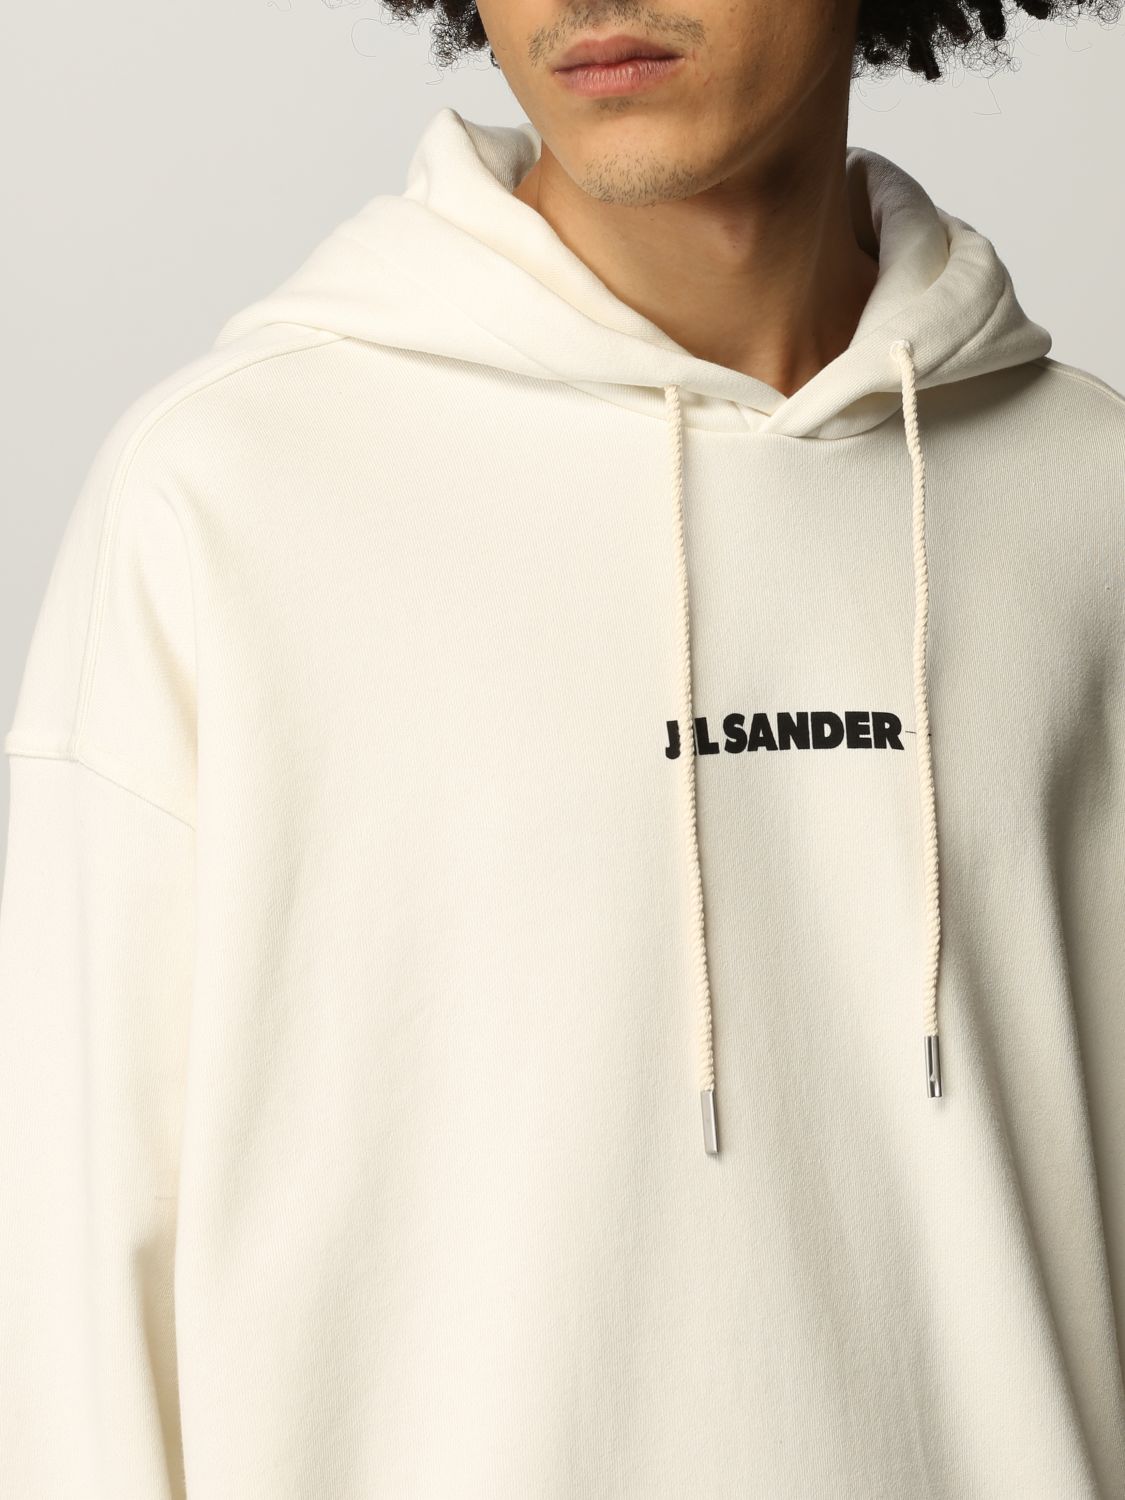 Jil Sander cotton sweatshirt with logo